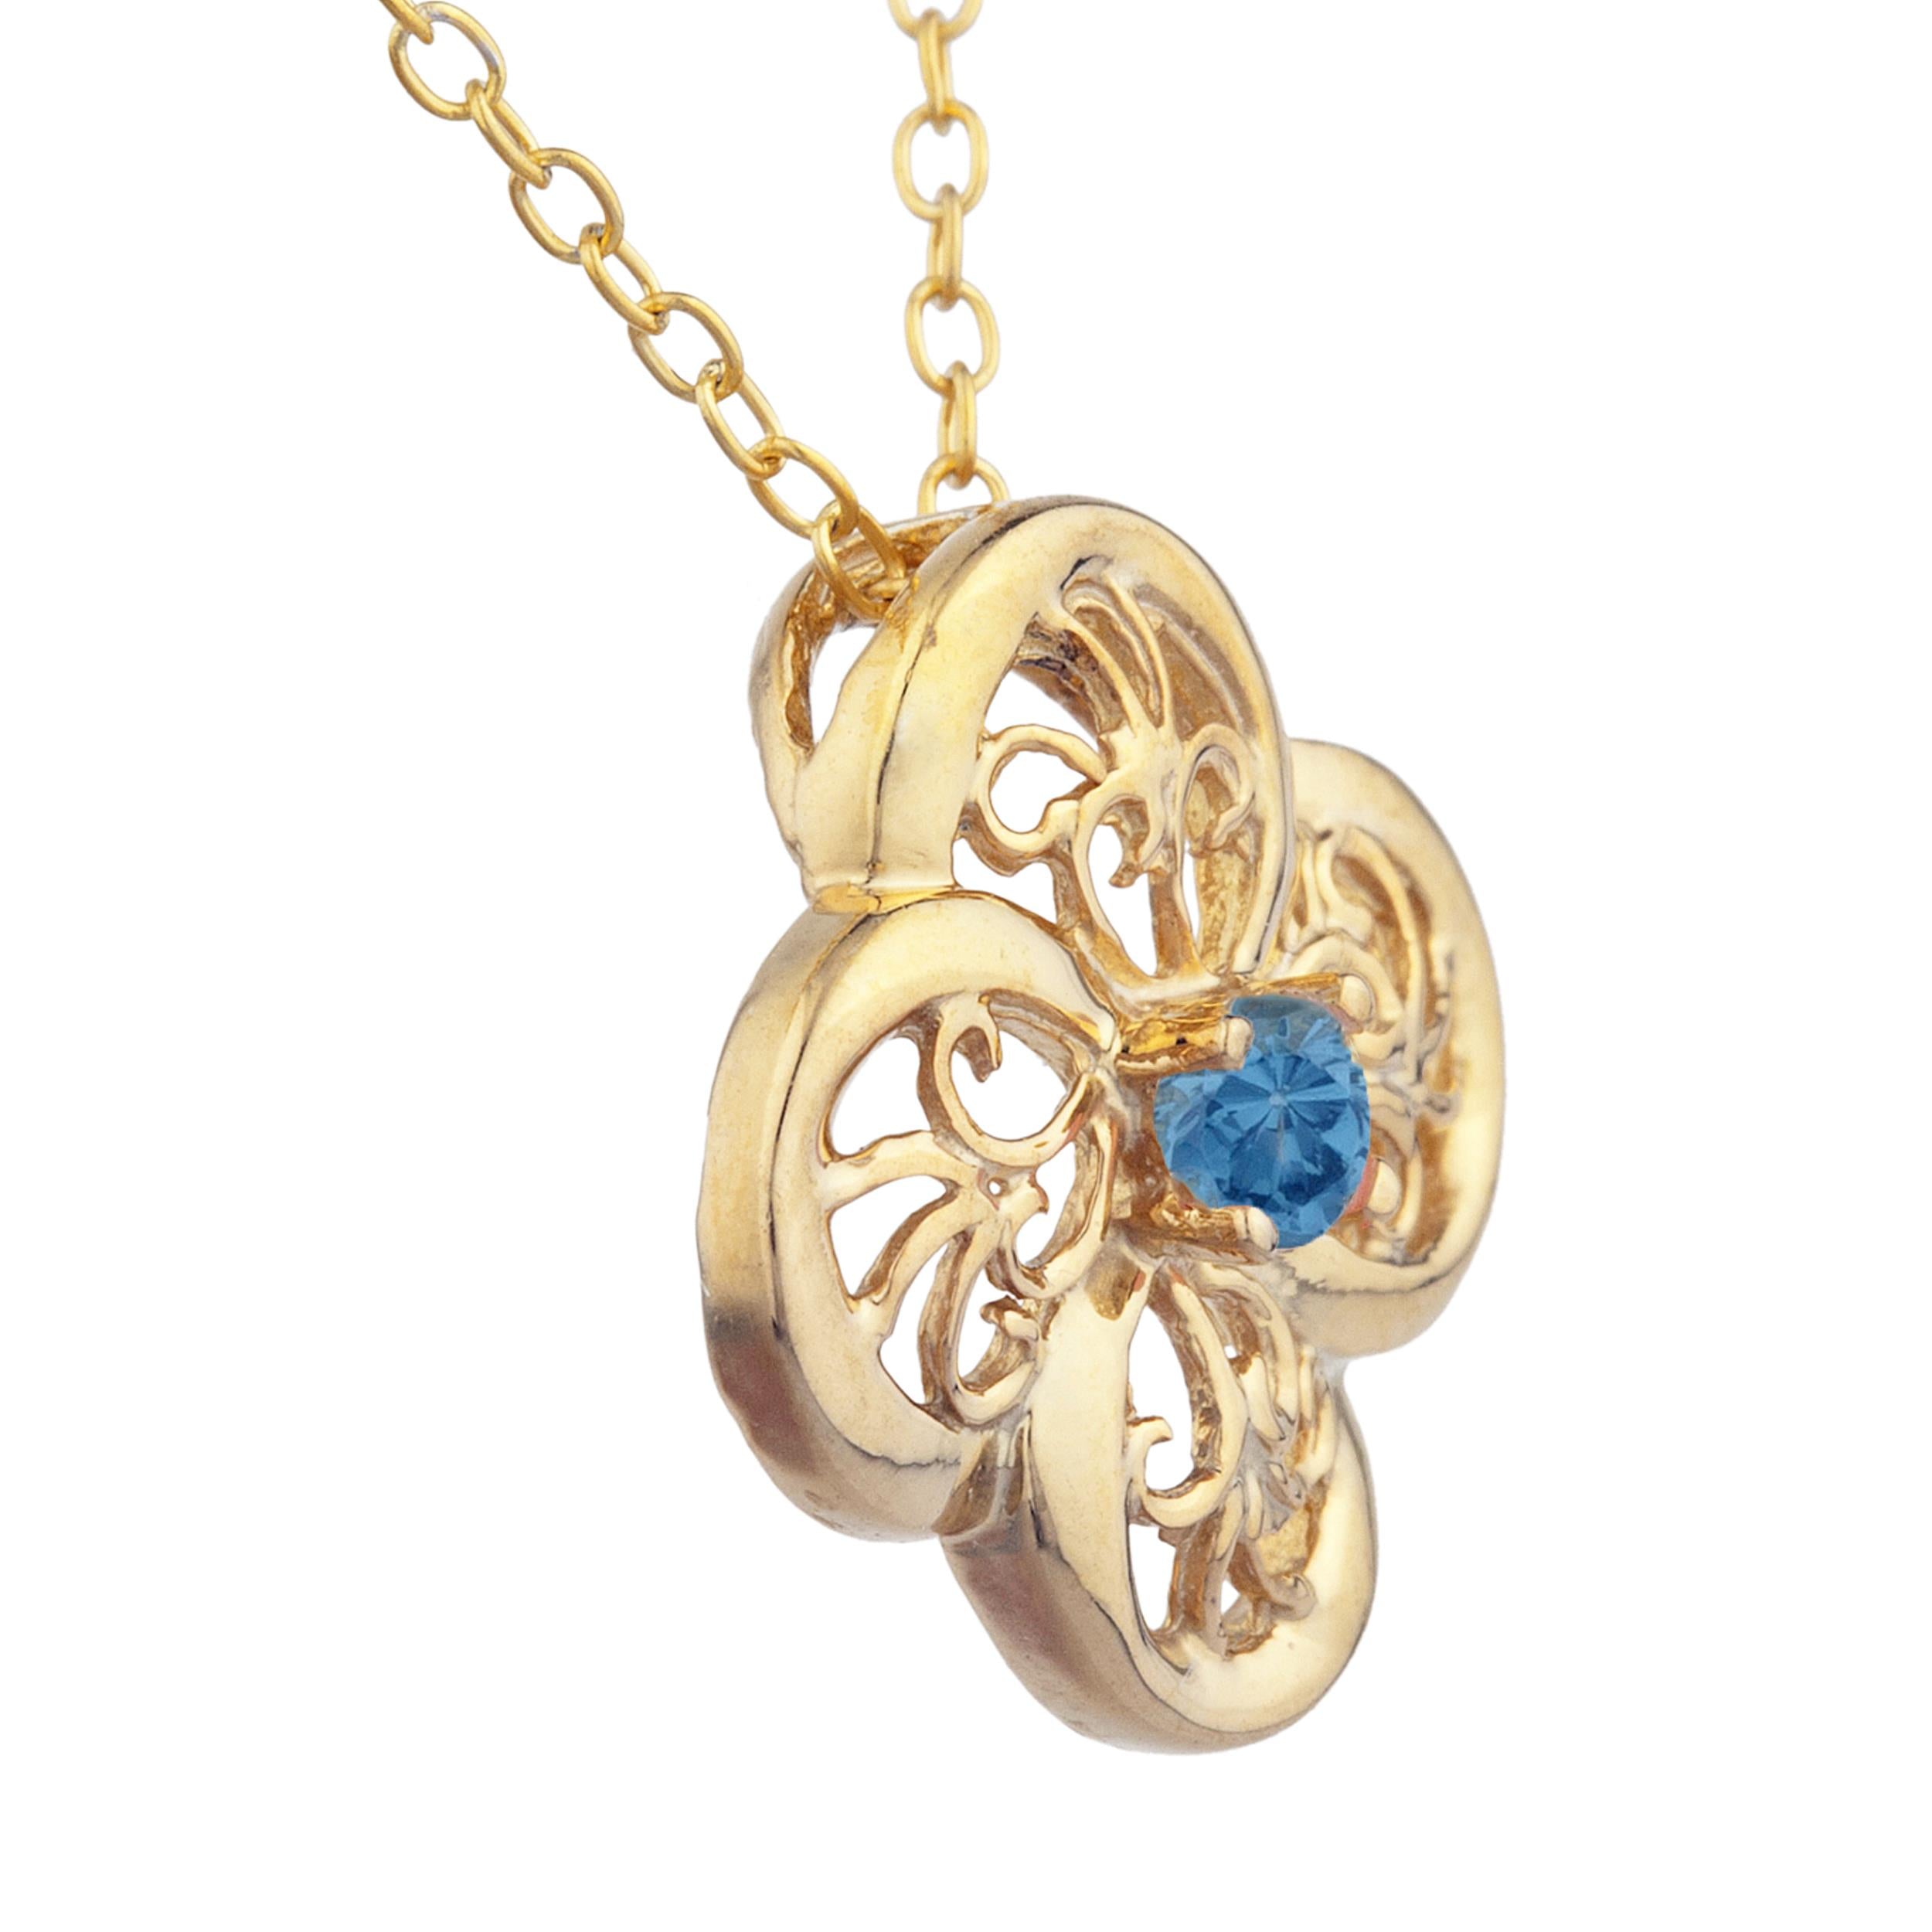 14Kt Gold London Blue Topaz Clover Design Pendant Necklace